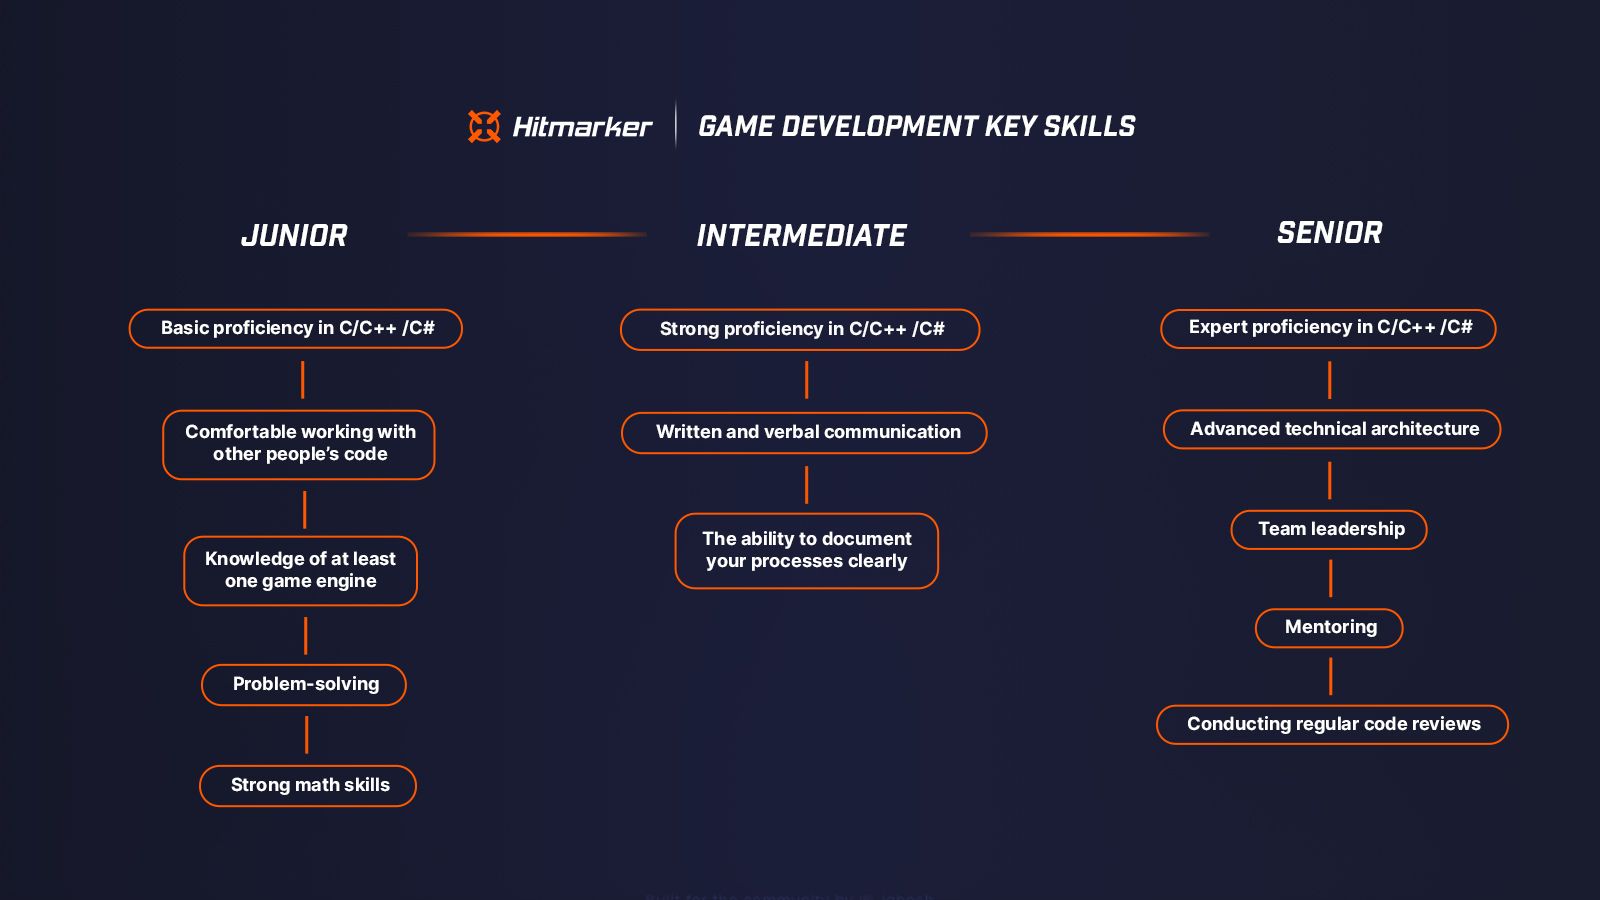 Image showing key skills for game development